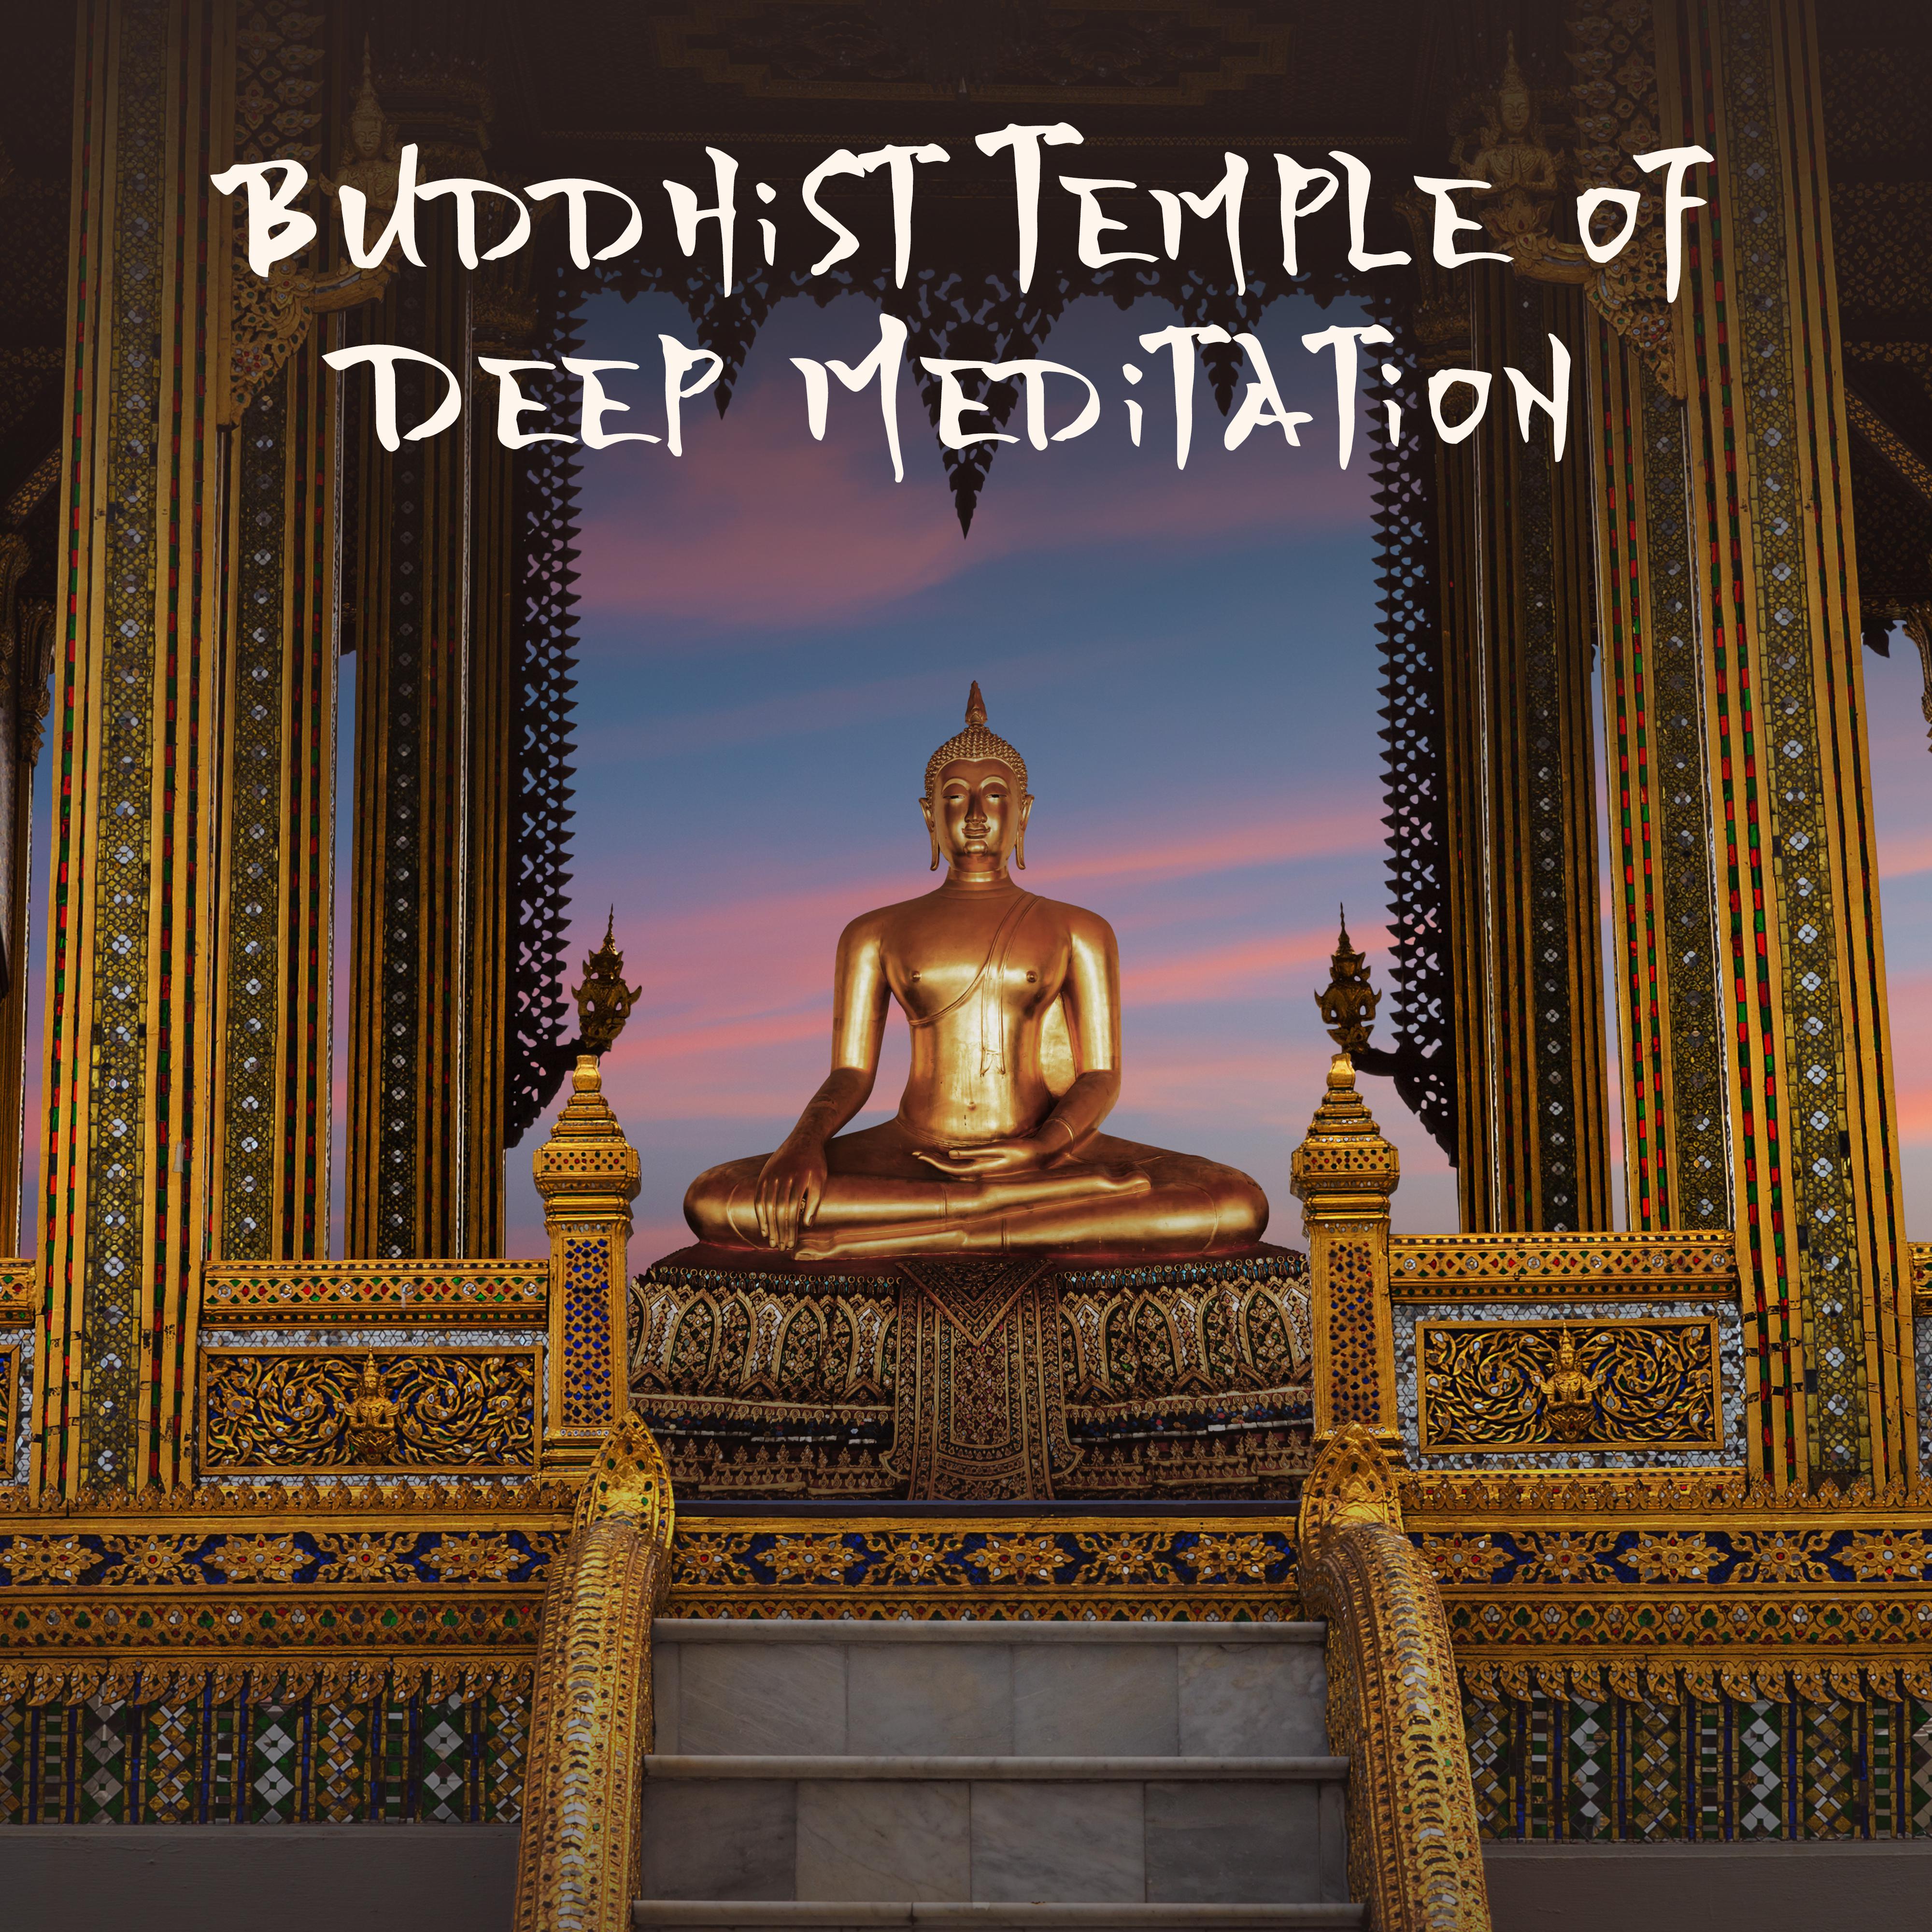 Temple of Meditation